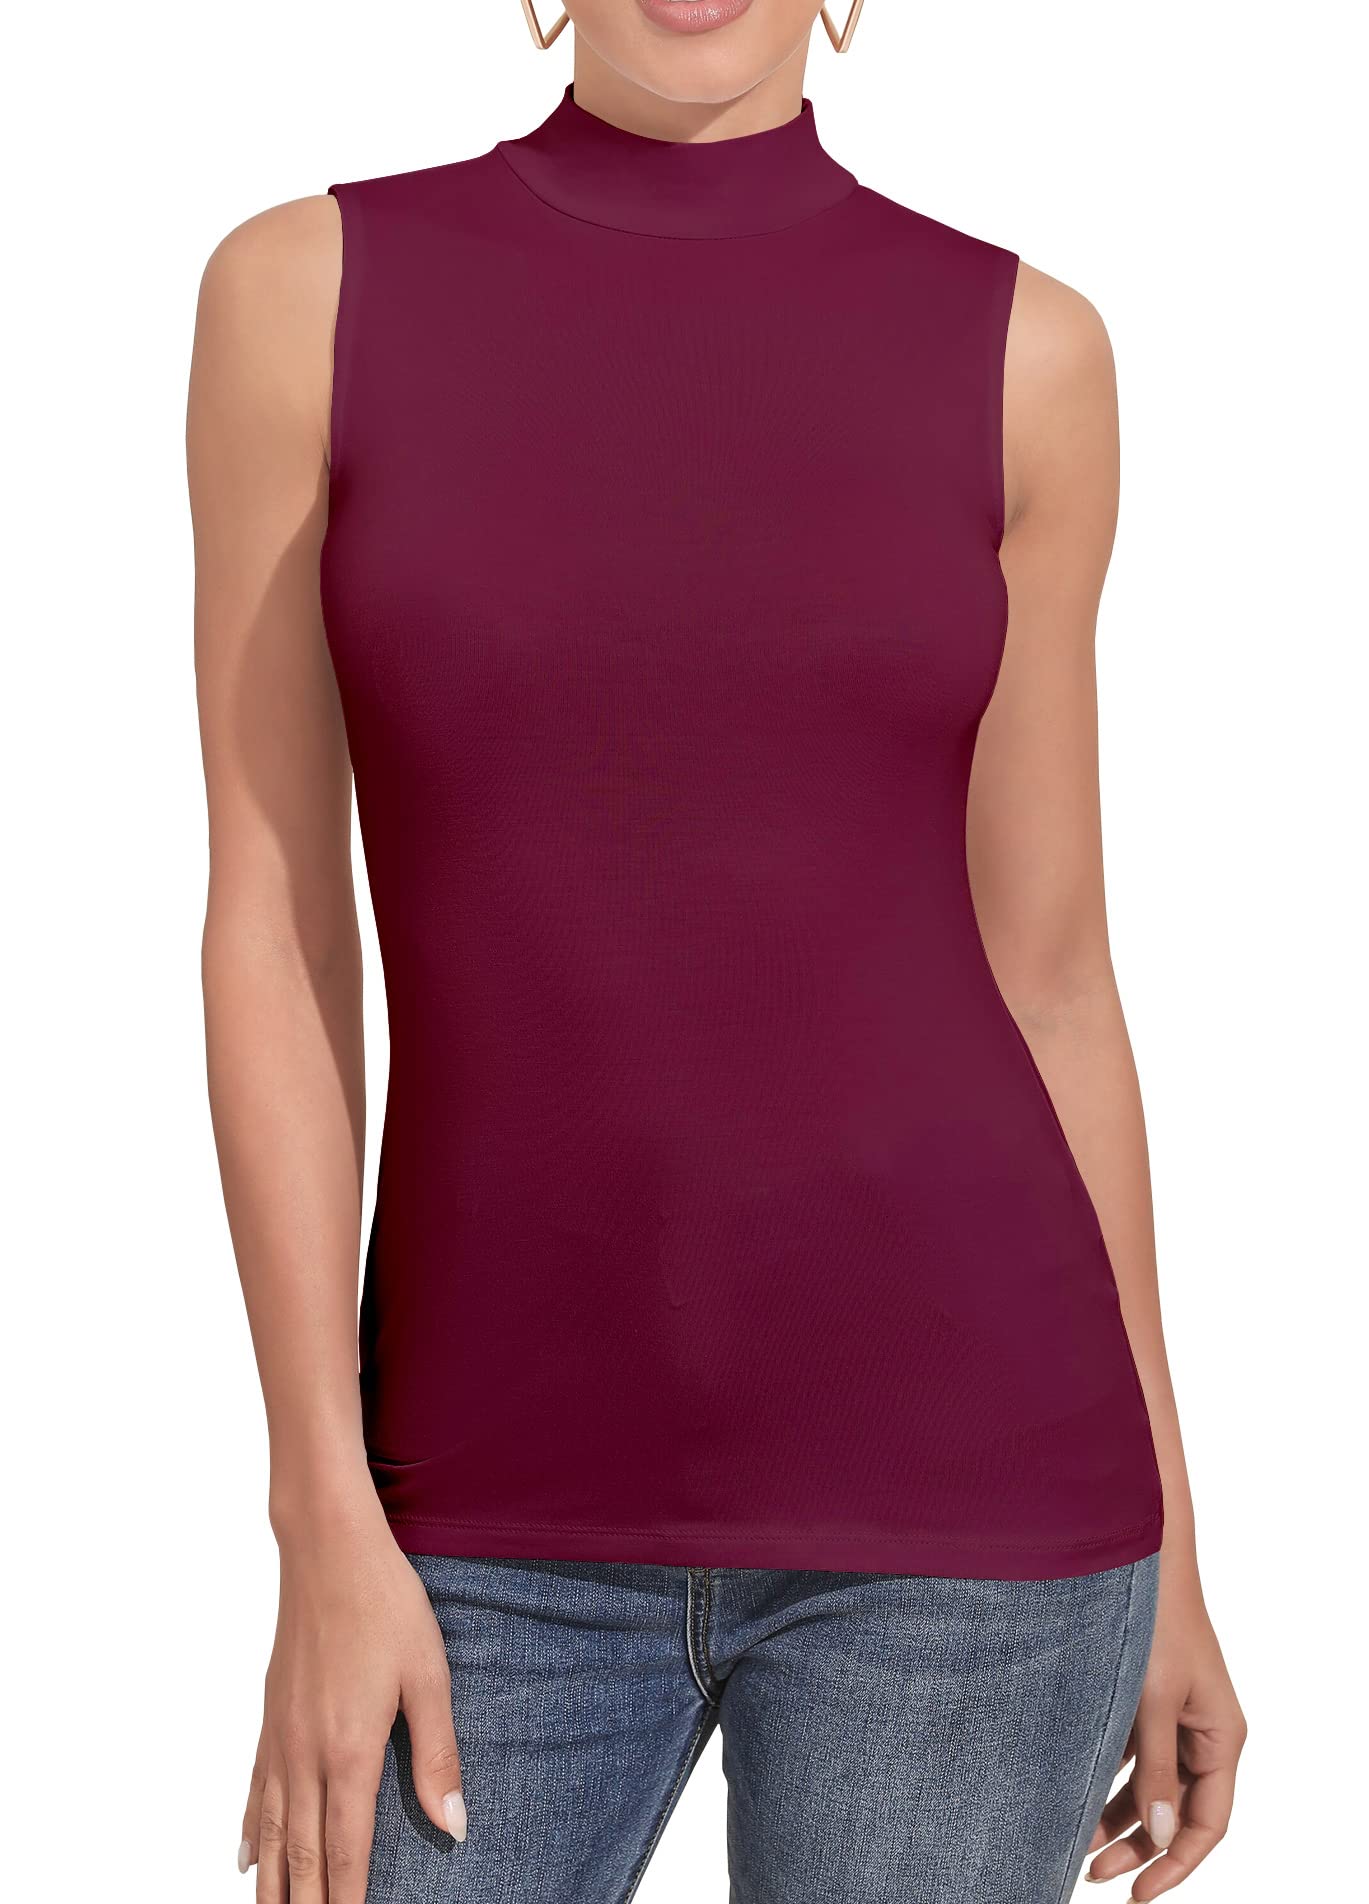 UNTYHOTS Women's Sleeveless Long Sleeves Mock Turtleneck Top Basic Stretch Fitting Pullover Lightweight Slim Shirt